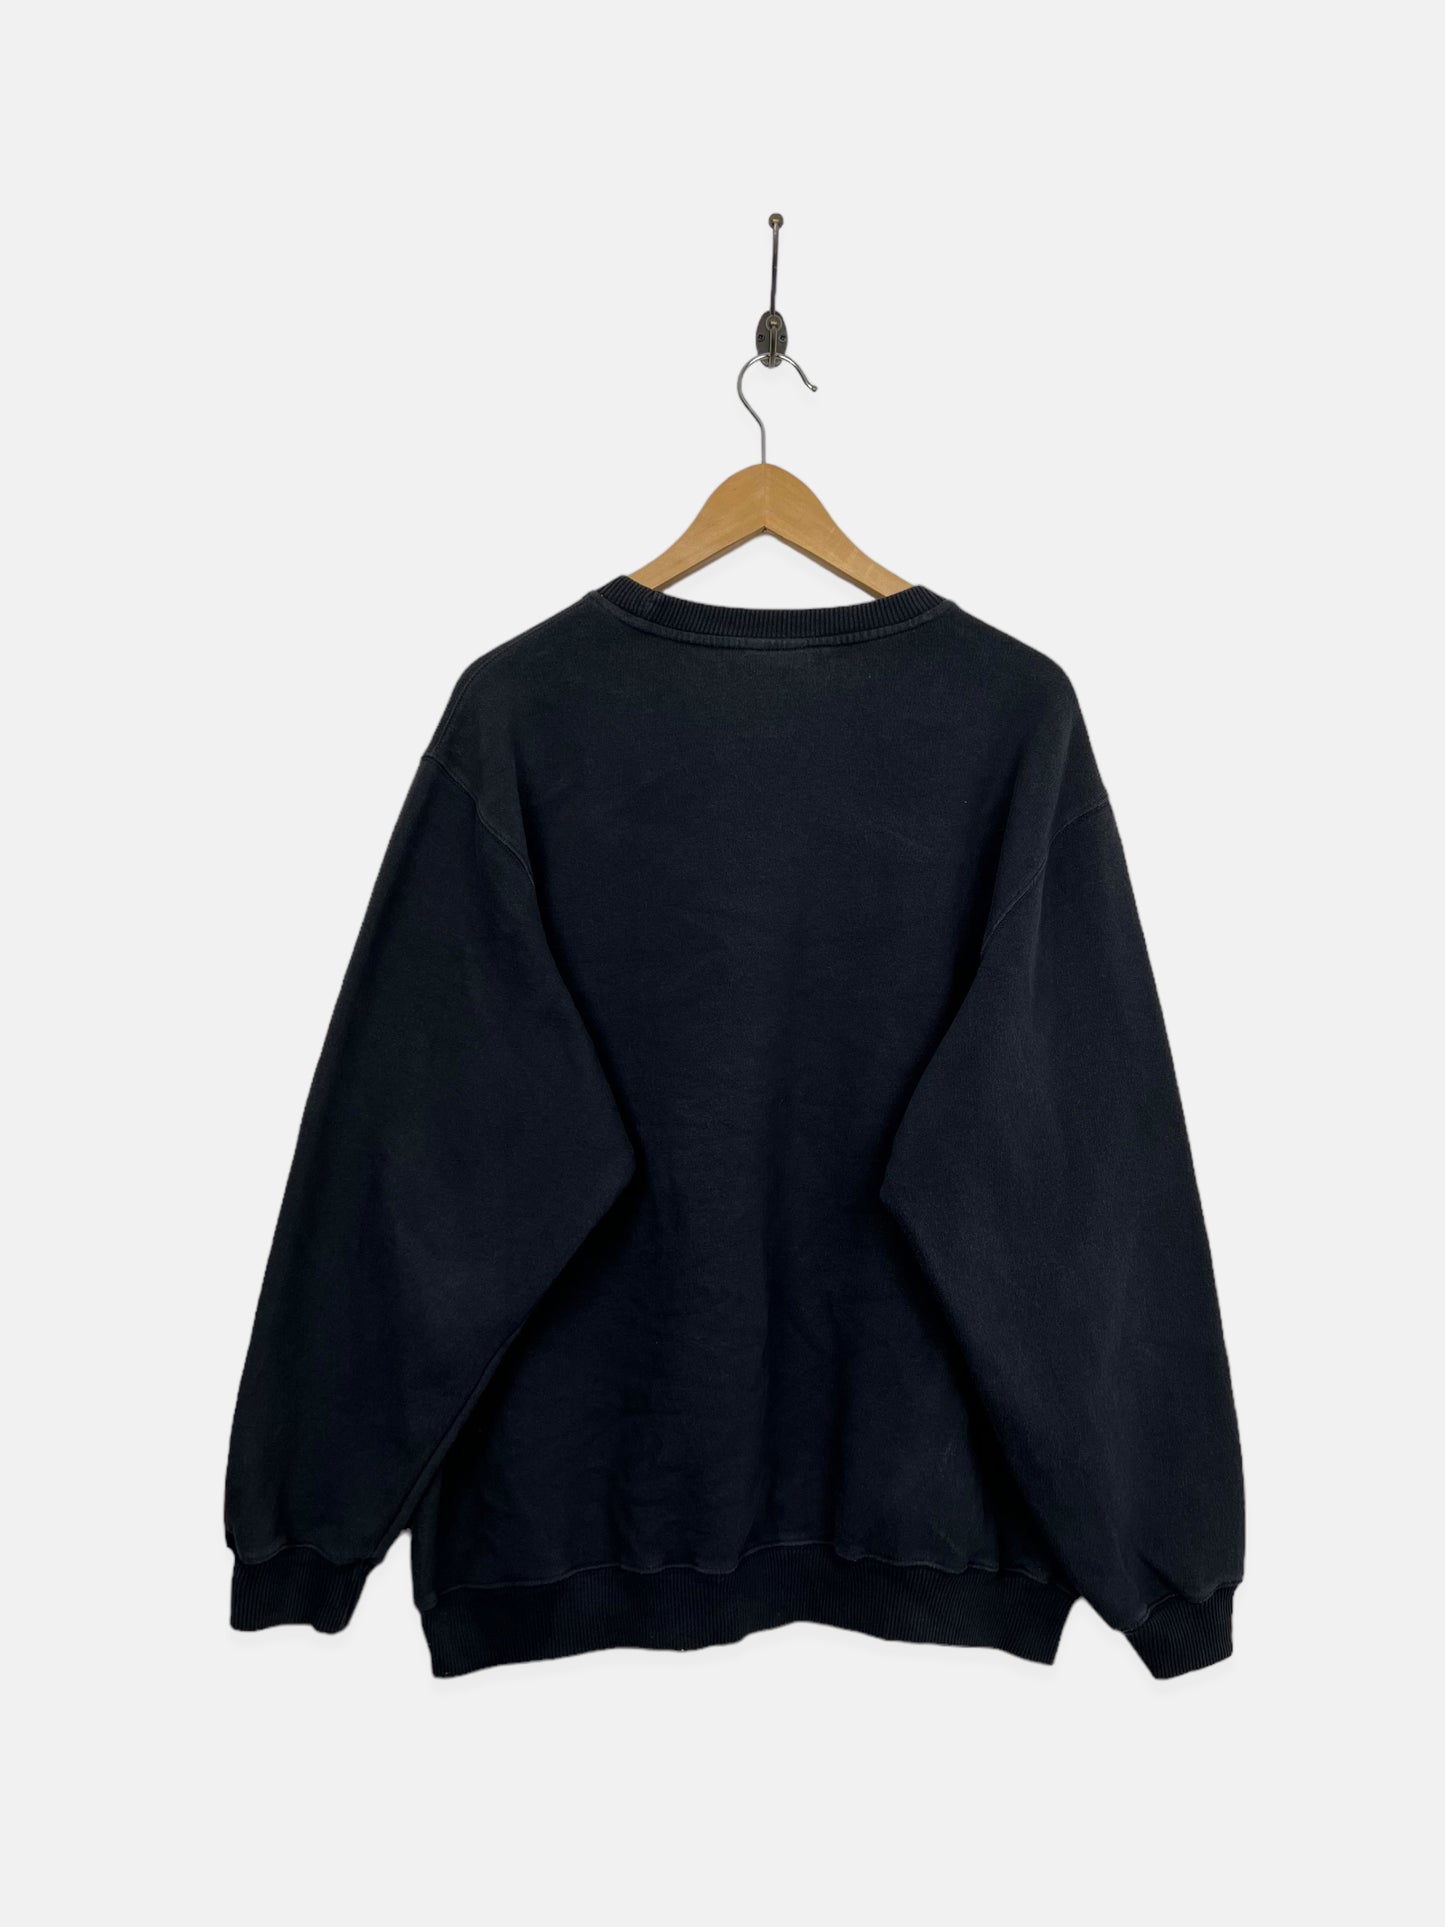 90's Adidas Embroidered Vintage Sweatshirt Size L